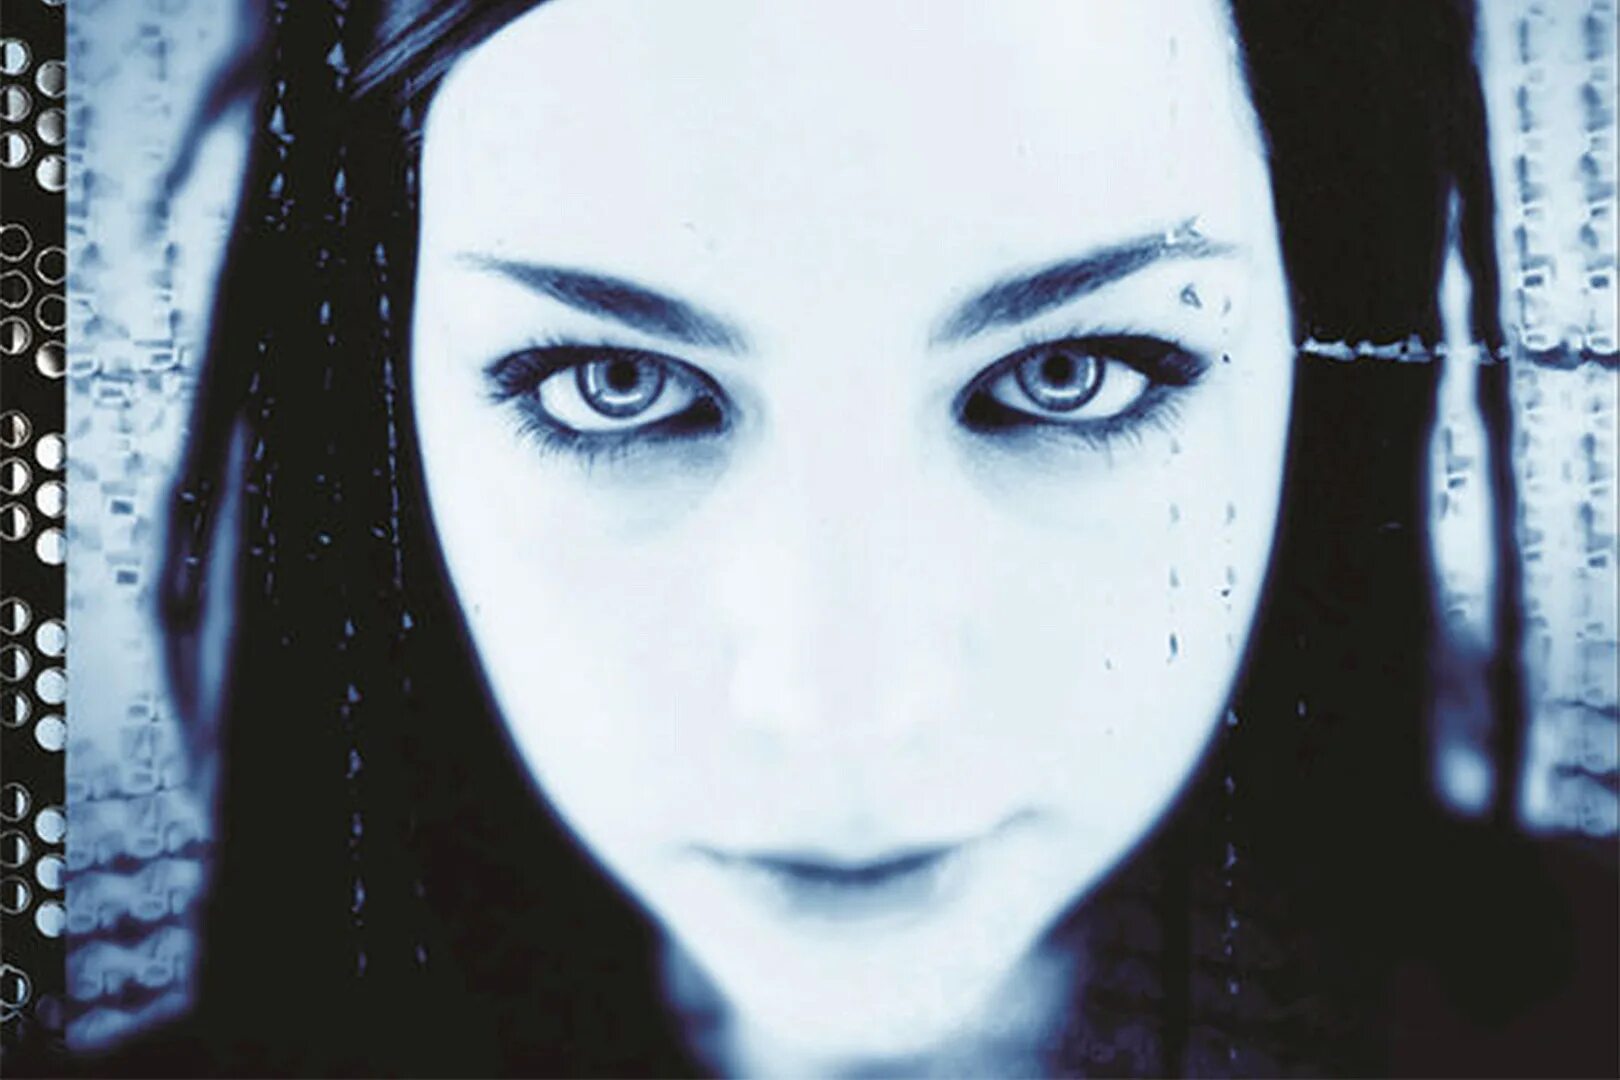 Want to life just. Группа Evanescence 2003. Amy Lee. Amy Lee 2003. Эми ли эванесенс.